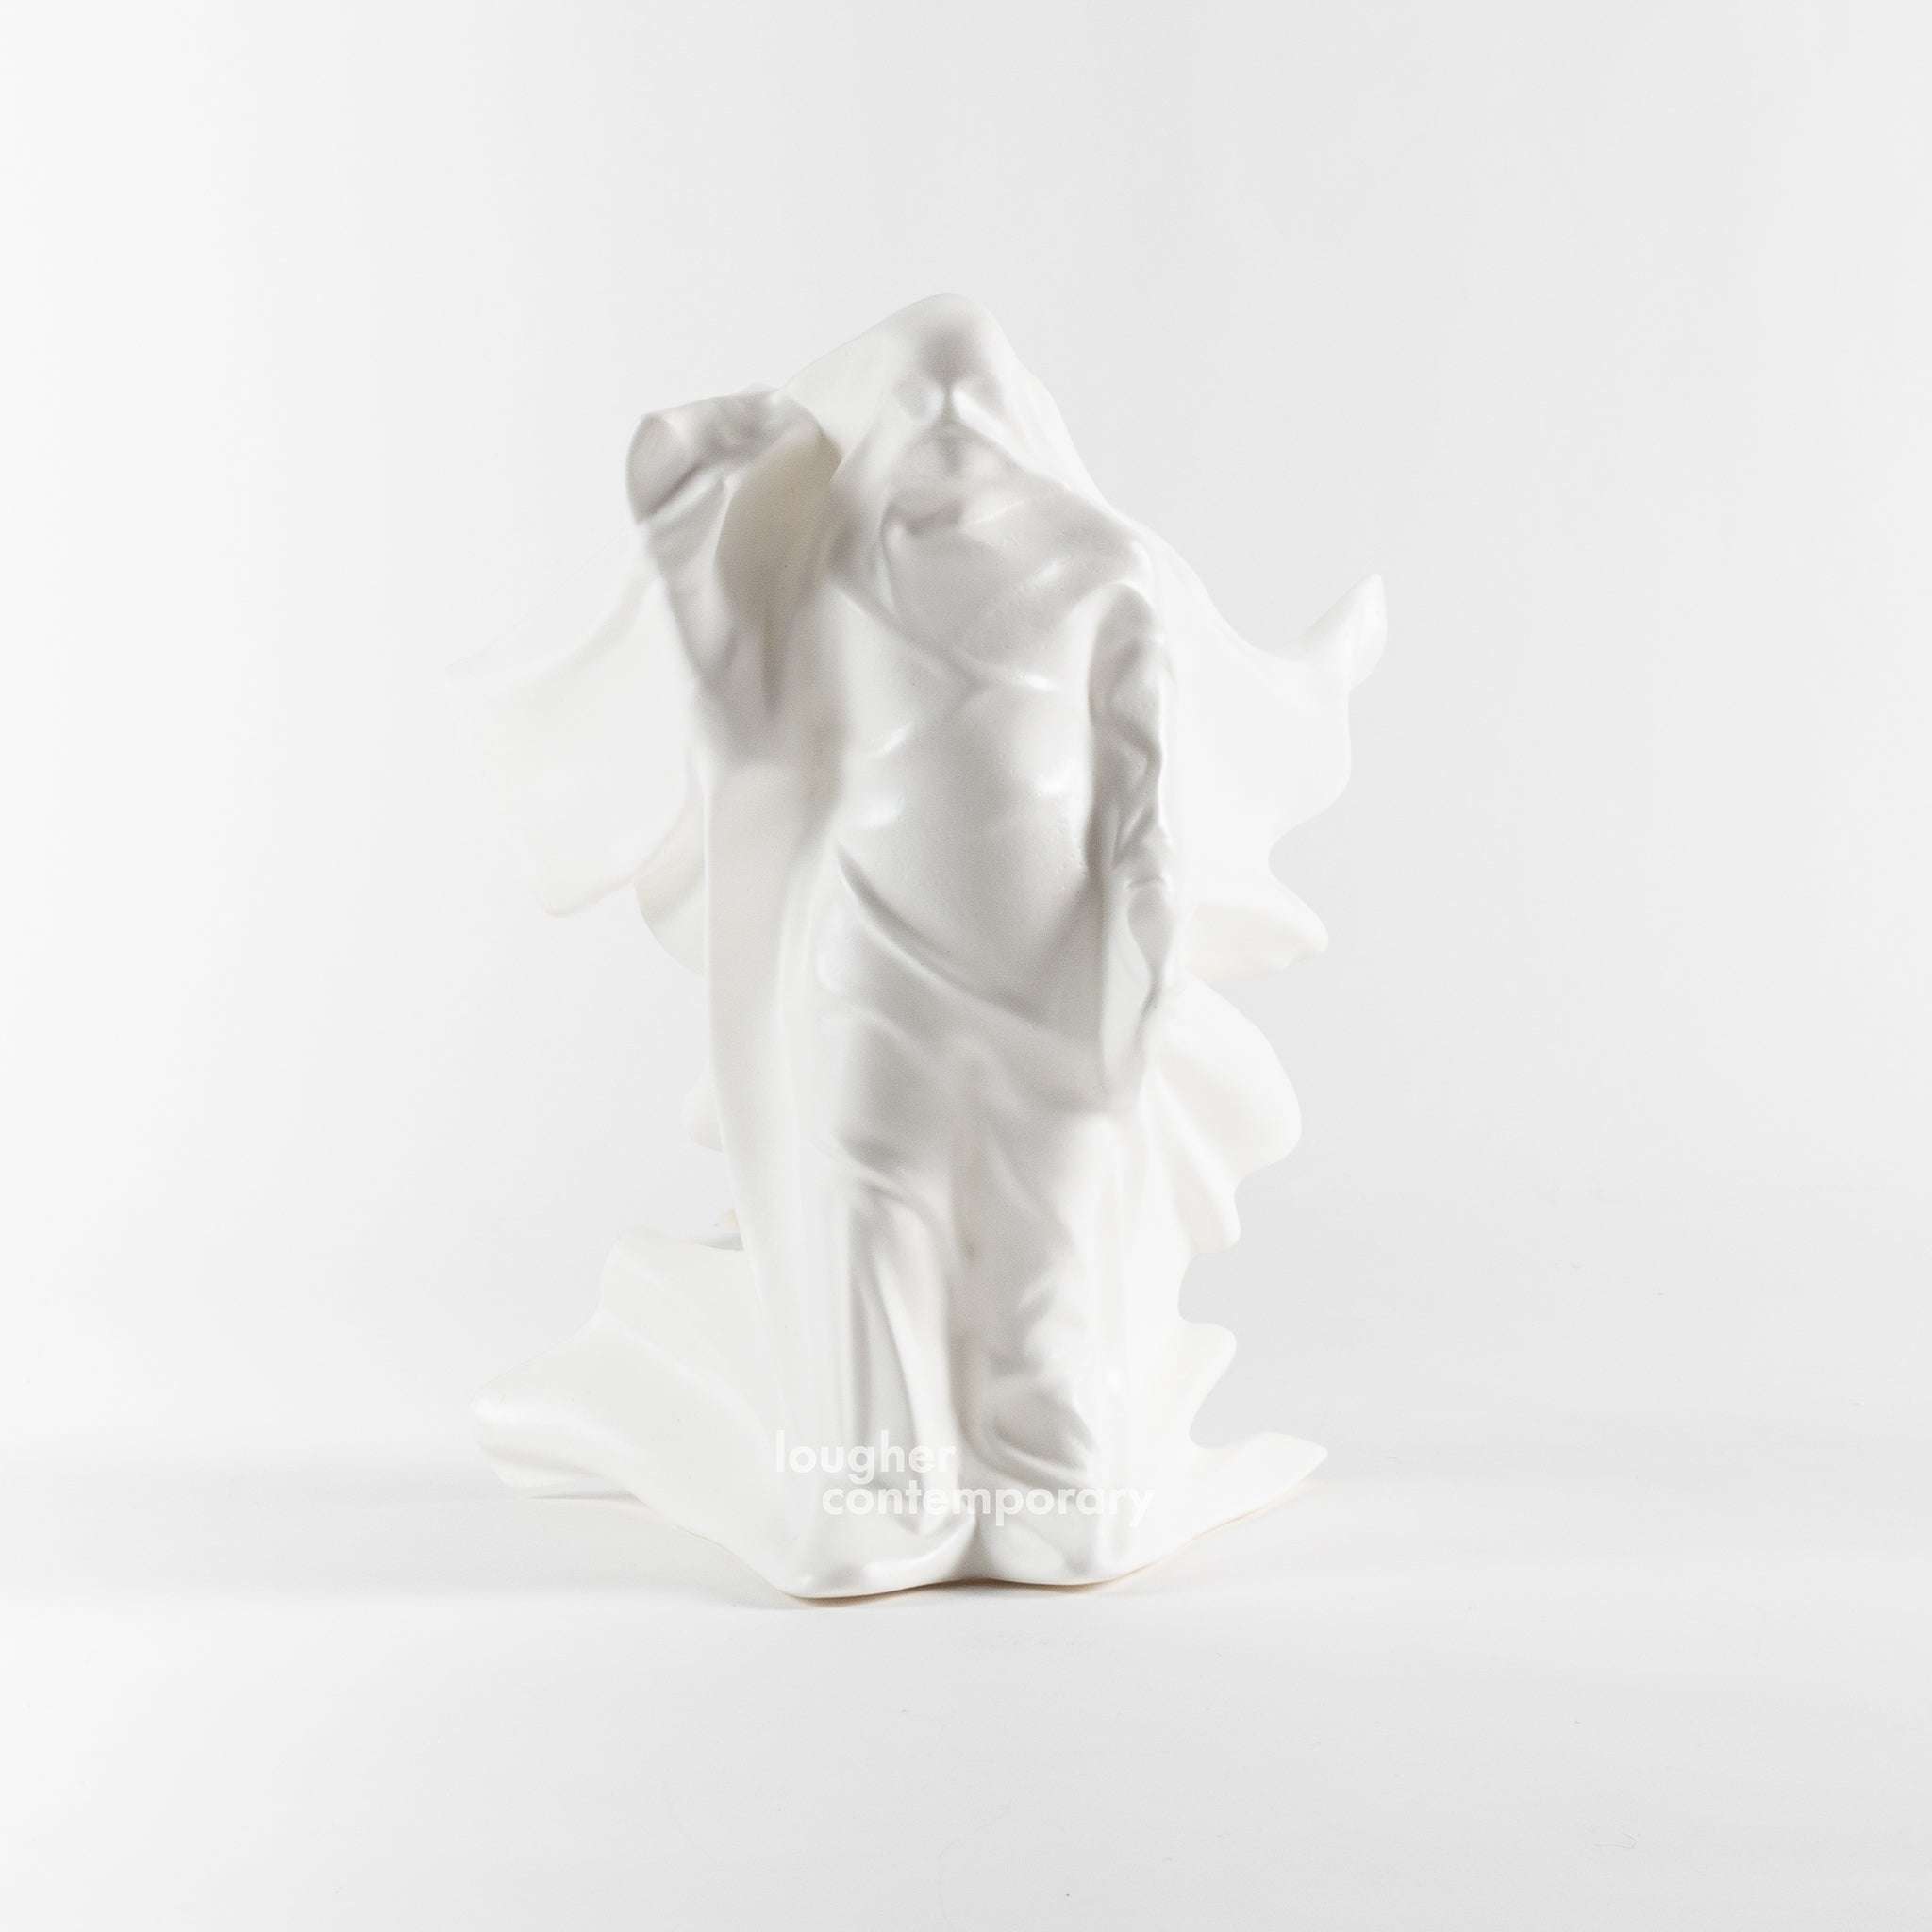 Daniel Arsham, Hollow Figure, 2018 For Sale - Lougher Contemporary